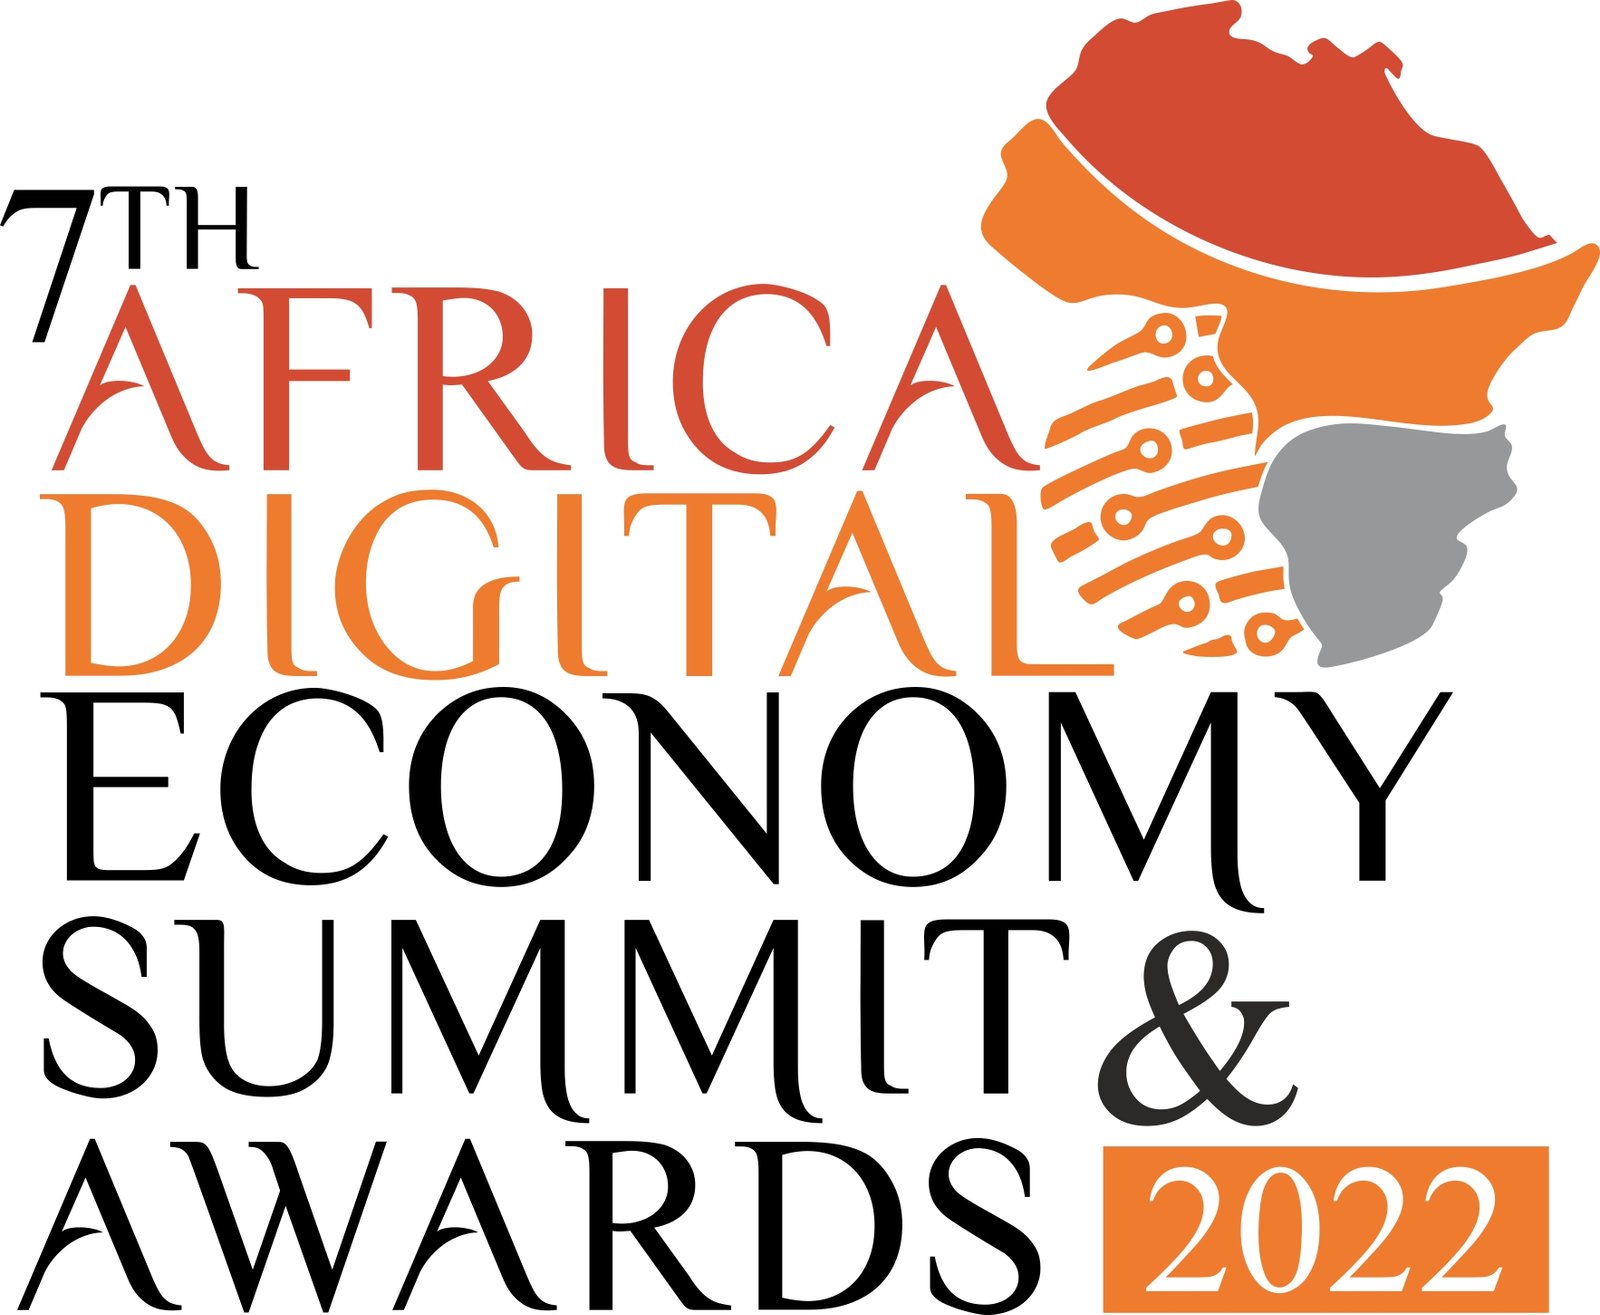 Africa Digital Economy Summit and Awards